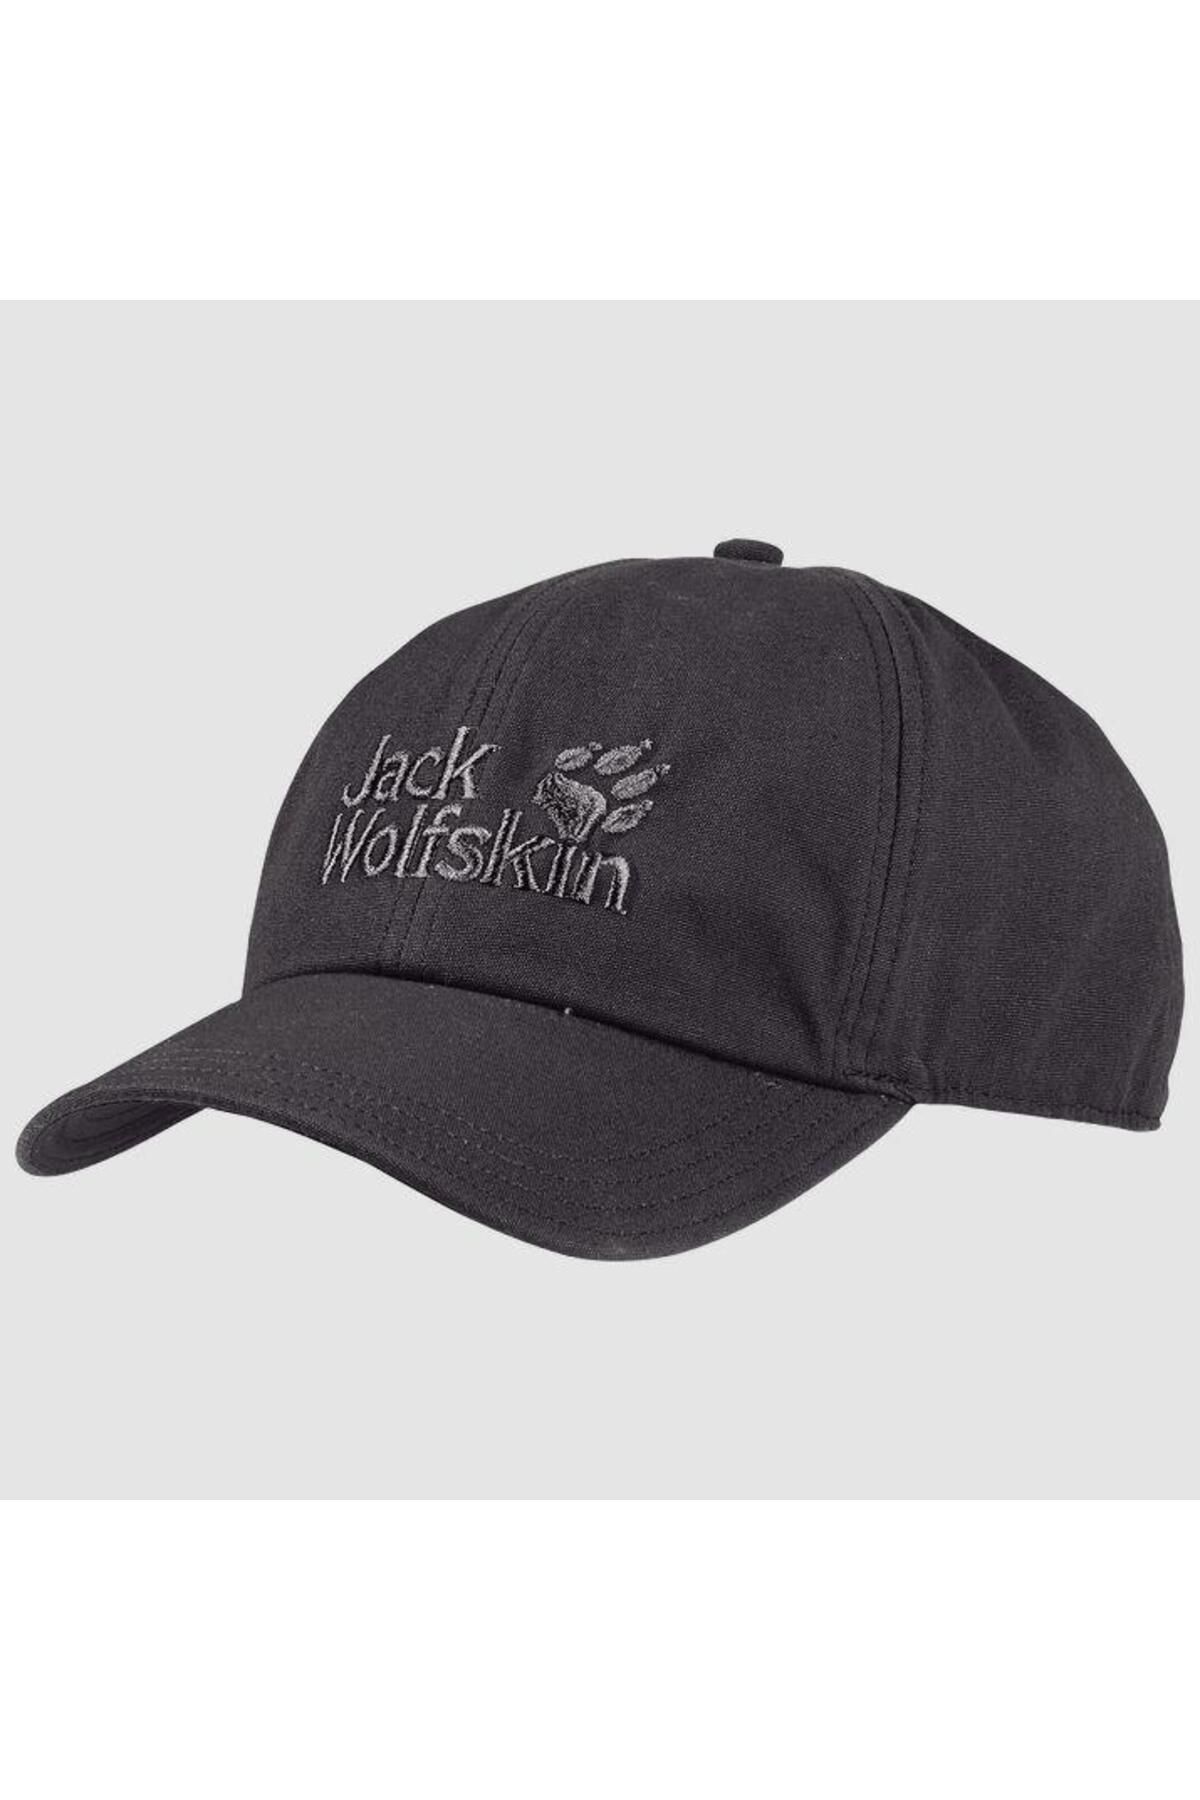 Jack Wolfskin BASEBALL Antrasit Unisex Şapka 101106853